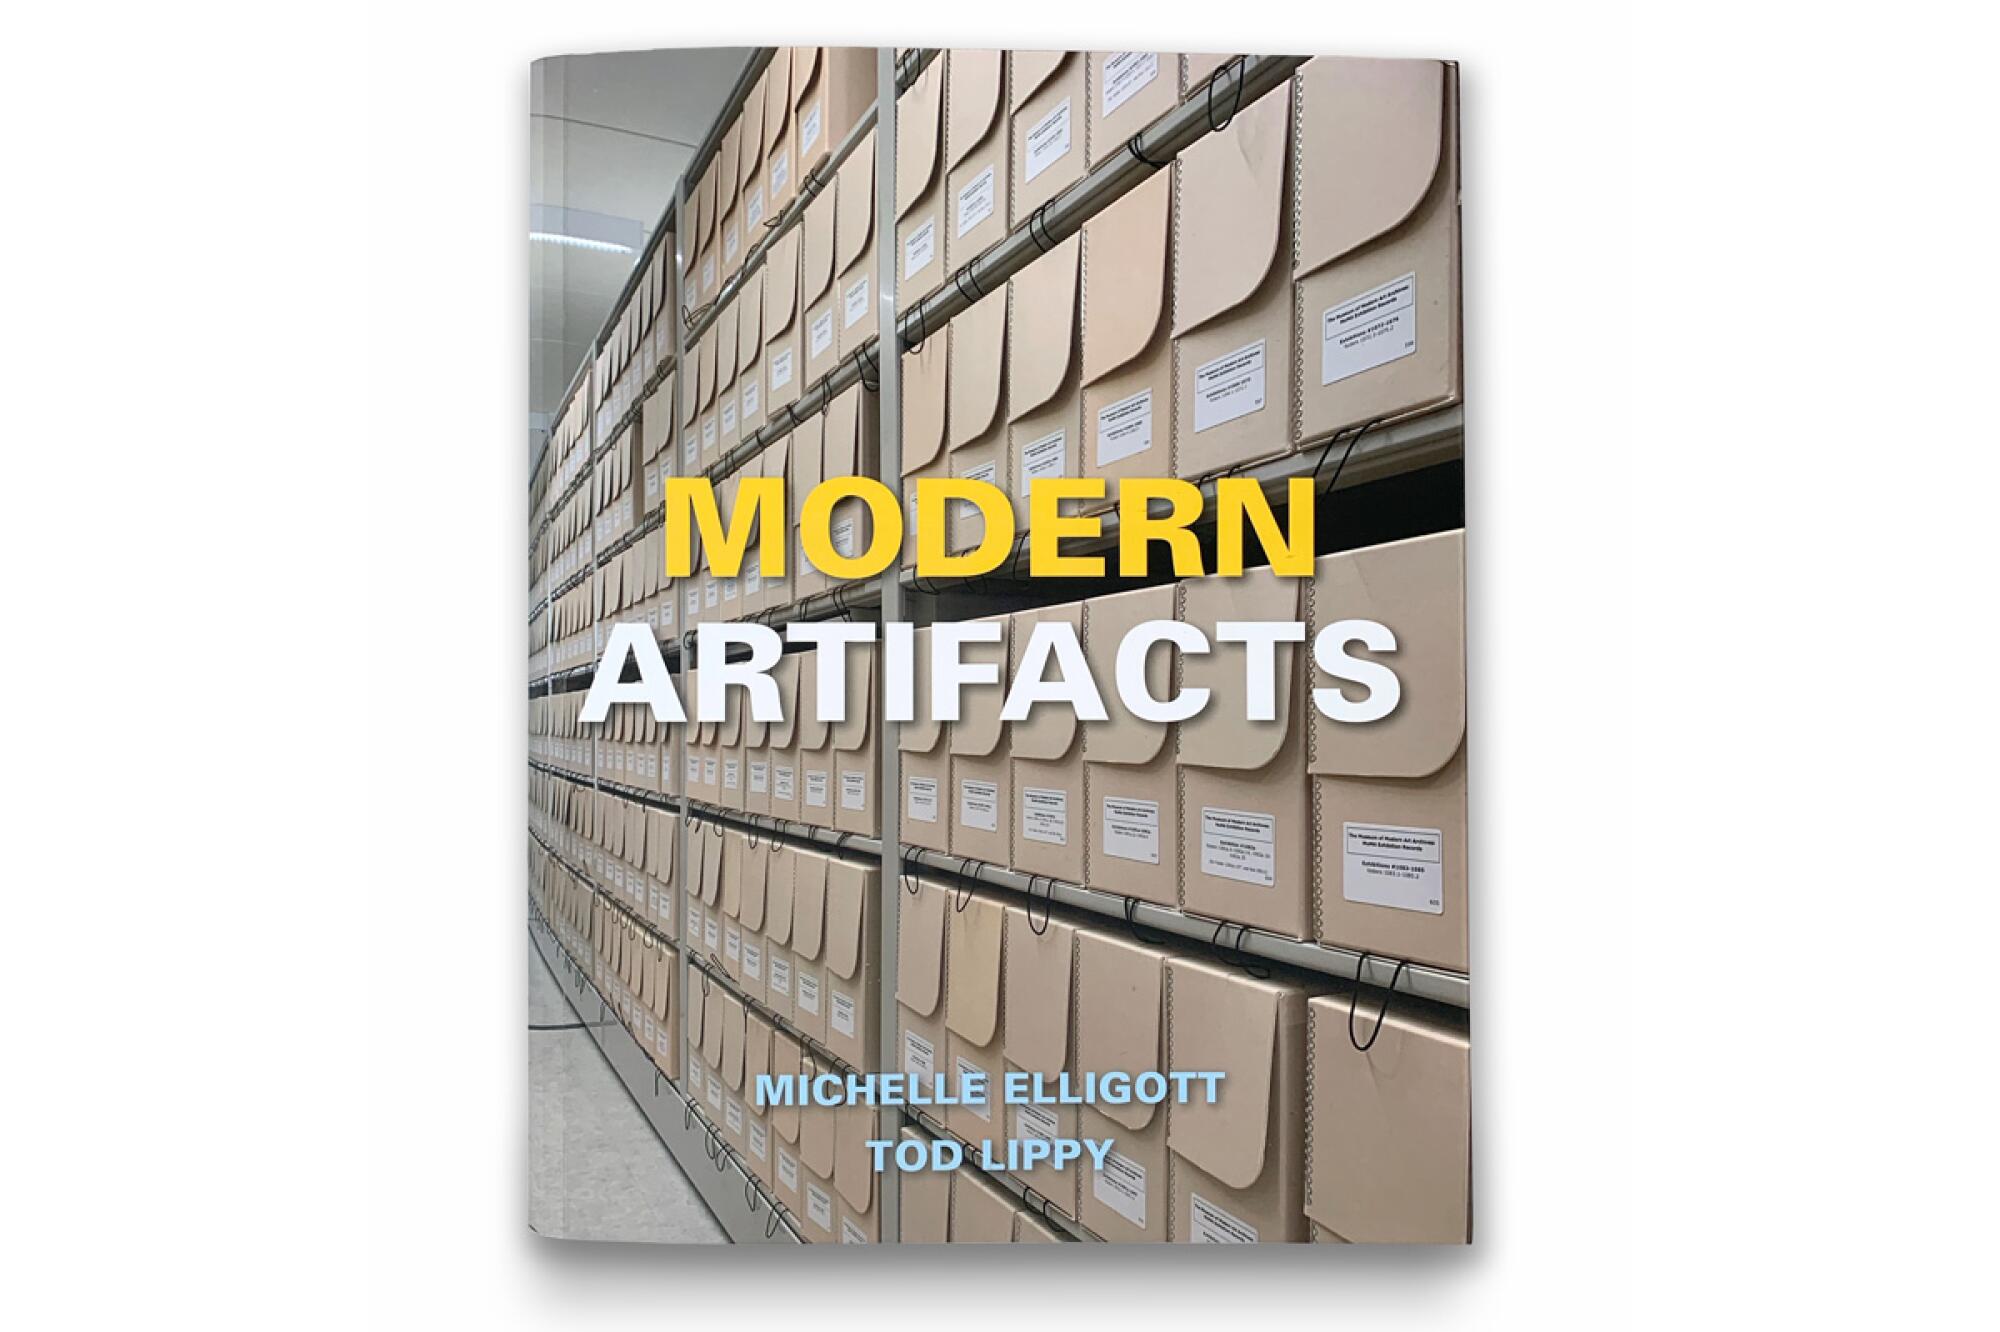 Michelle Elligott and Tod Lippy, "Modern Artifacts"